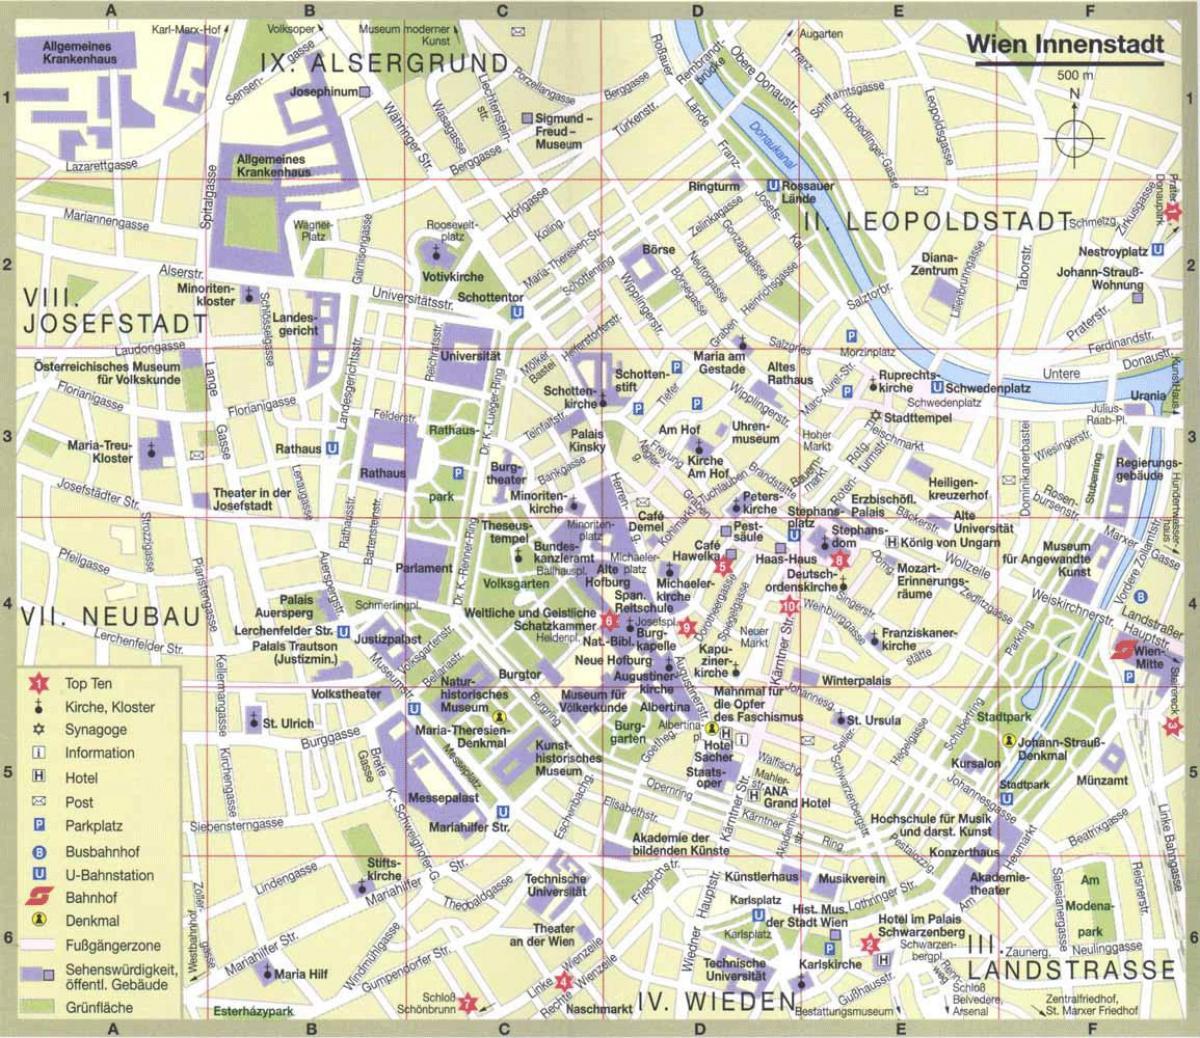 Vienna city turist kart